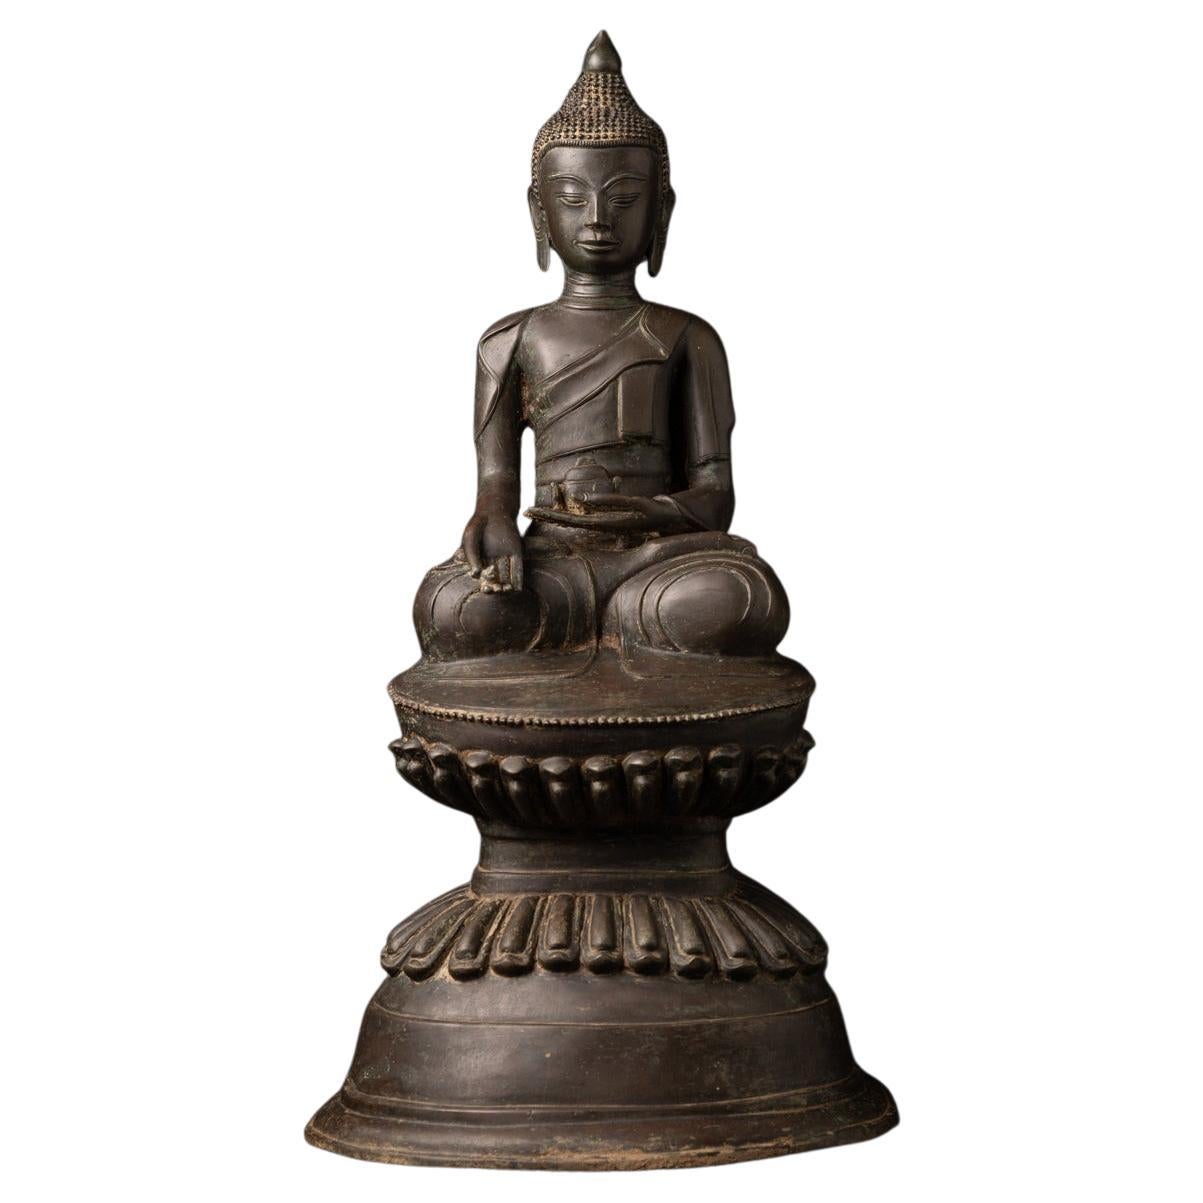 Early 20th century Old bronze Burmese Buddha statue from Burma